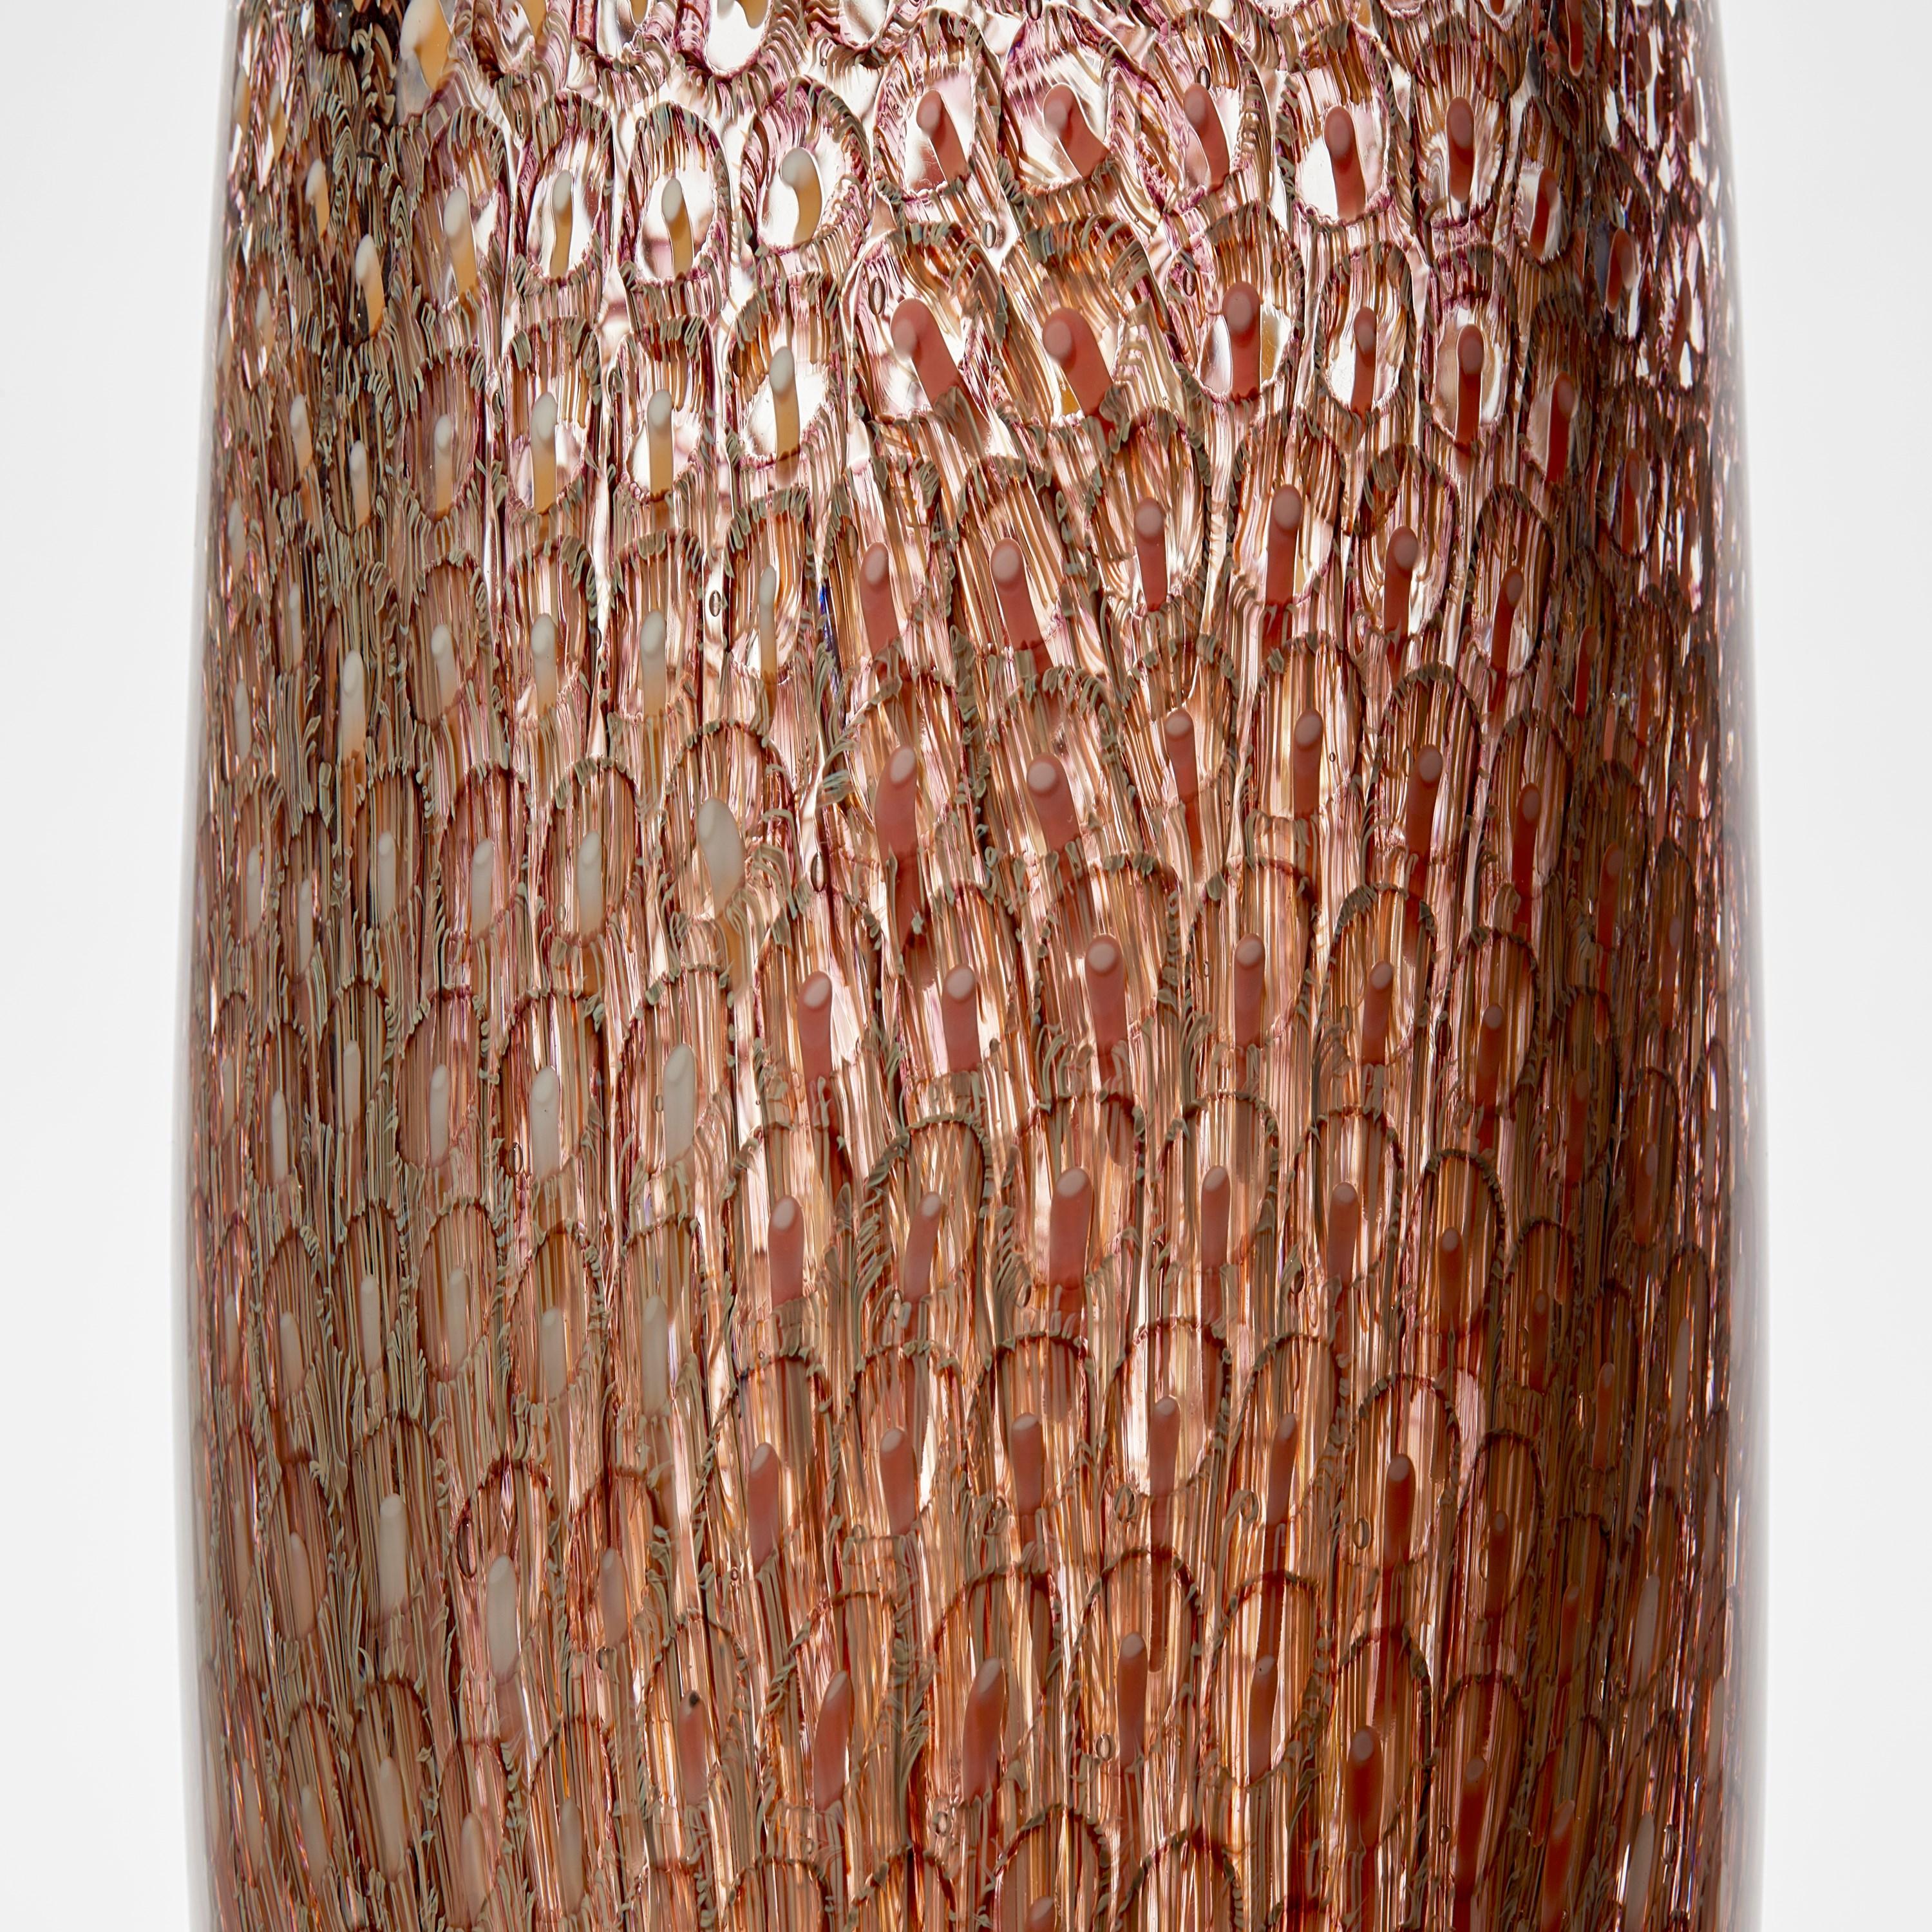 Organic Modern Murrine Quadrants Tall Form in Salmon & Primrose, glass vessel by Peter Bowles